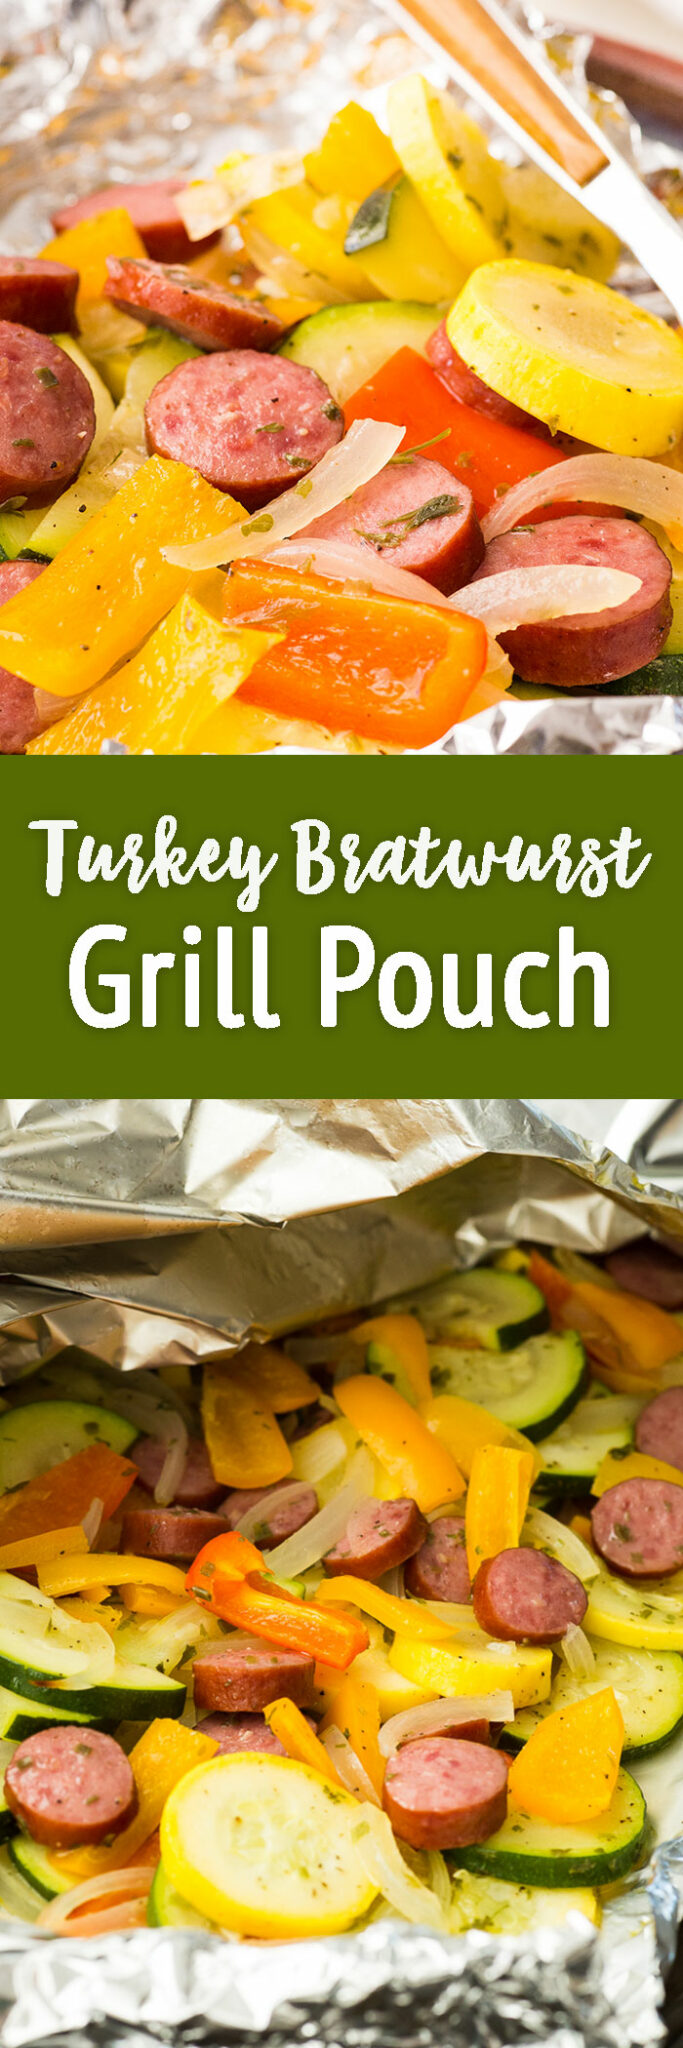 Turkey bratwurst grill pouch. 